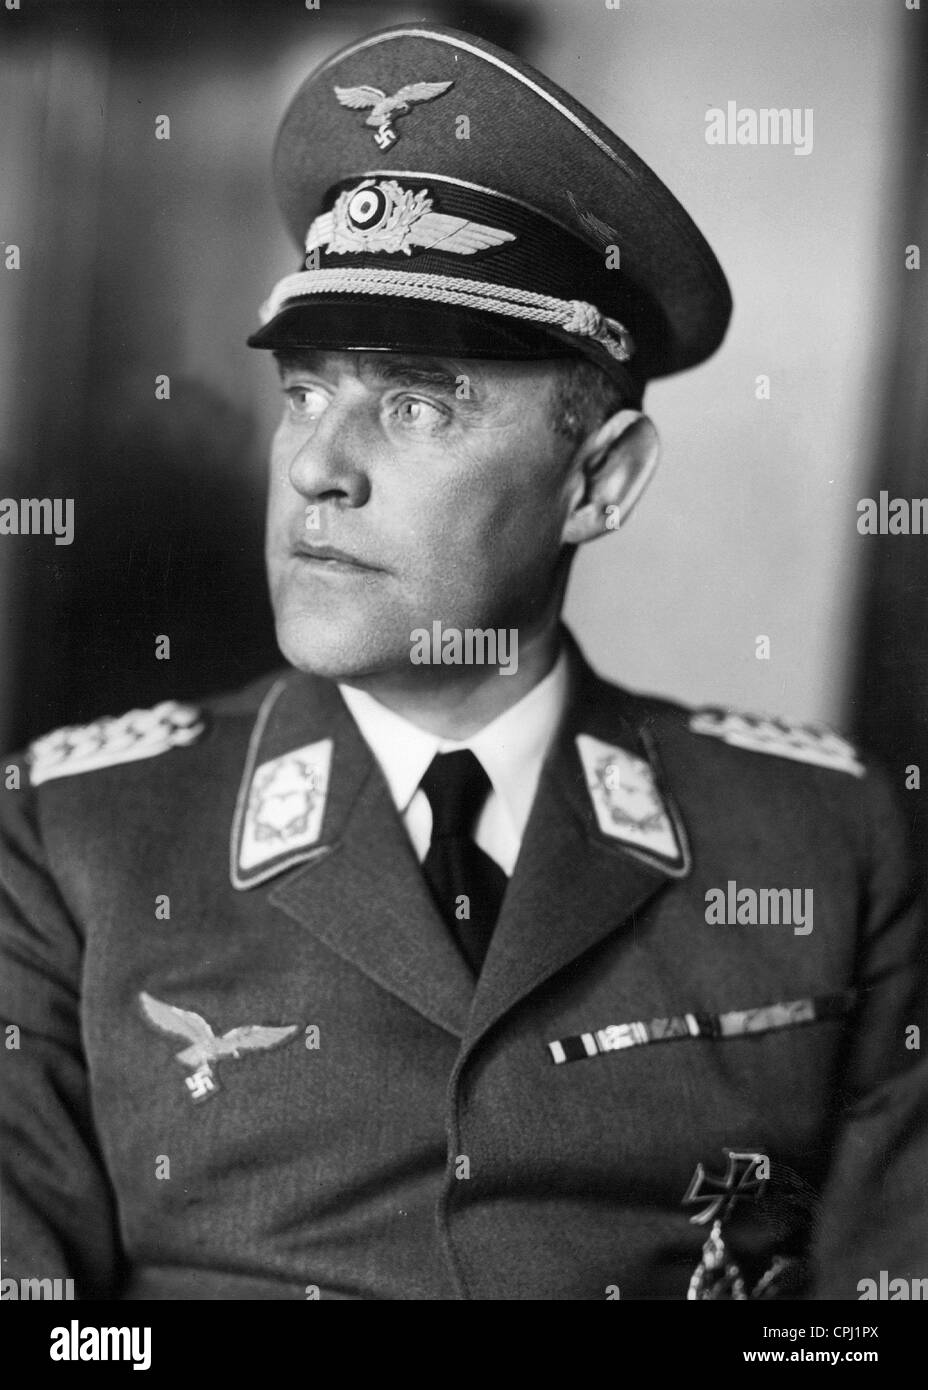 Karl Bodenschatz, 1938 Stock Photo - Alamy